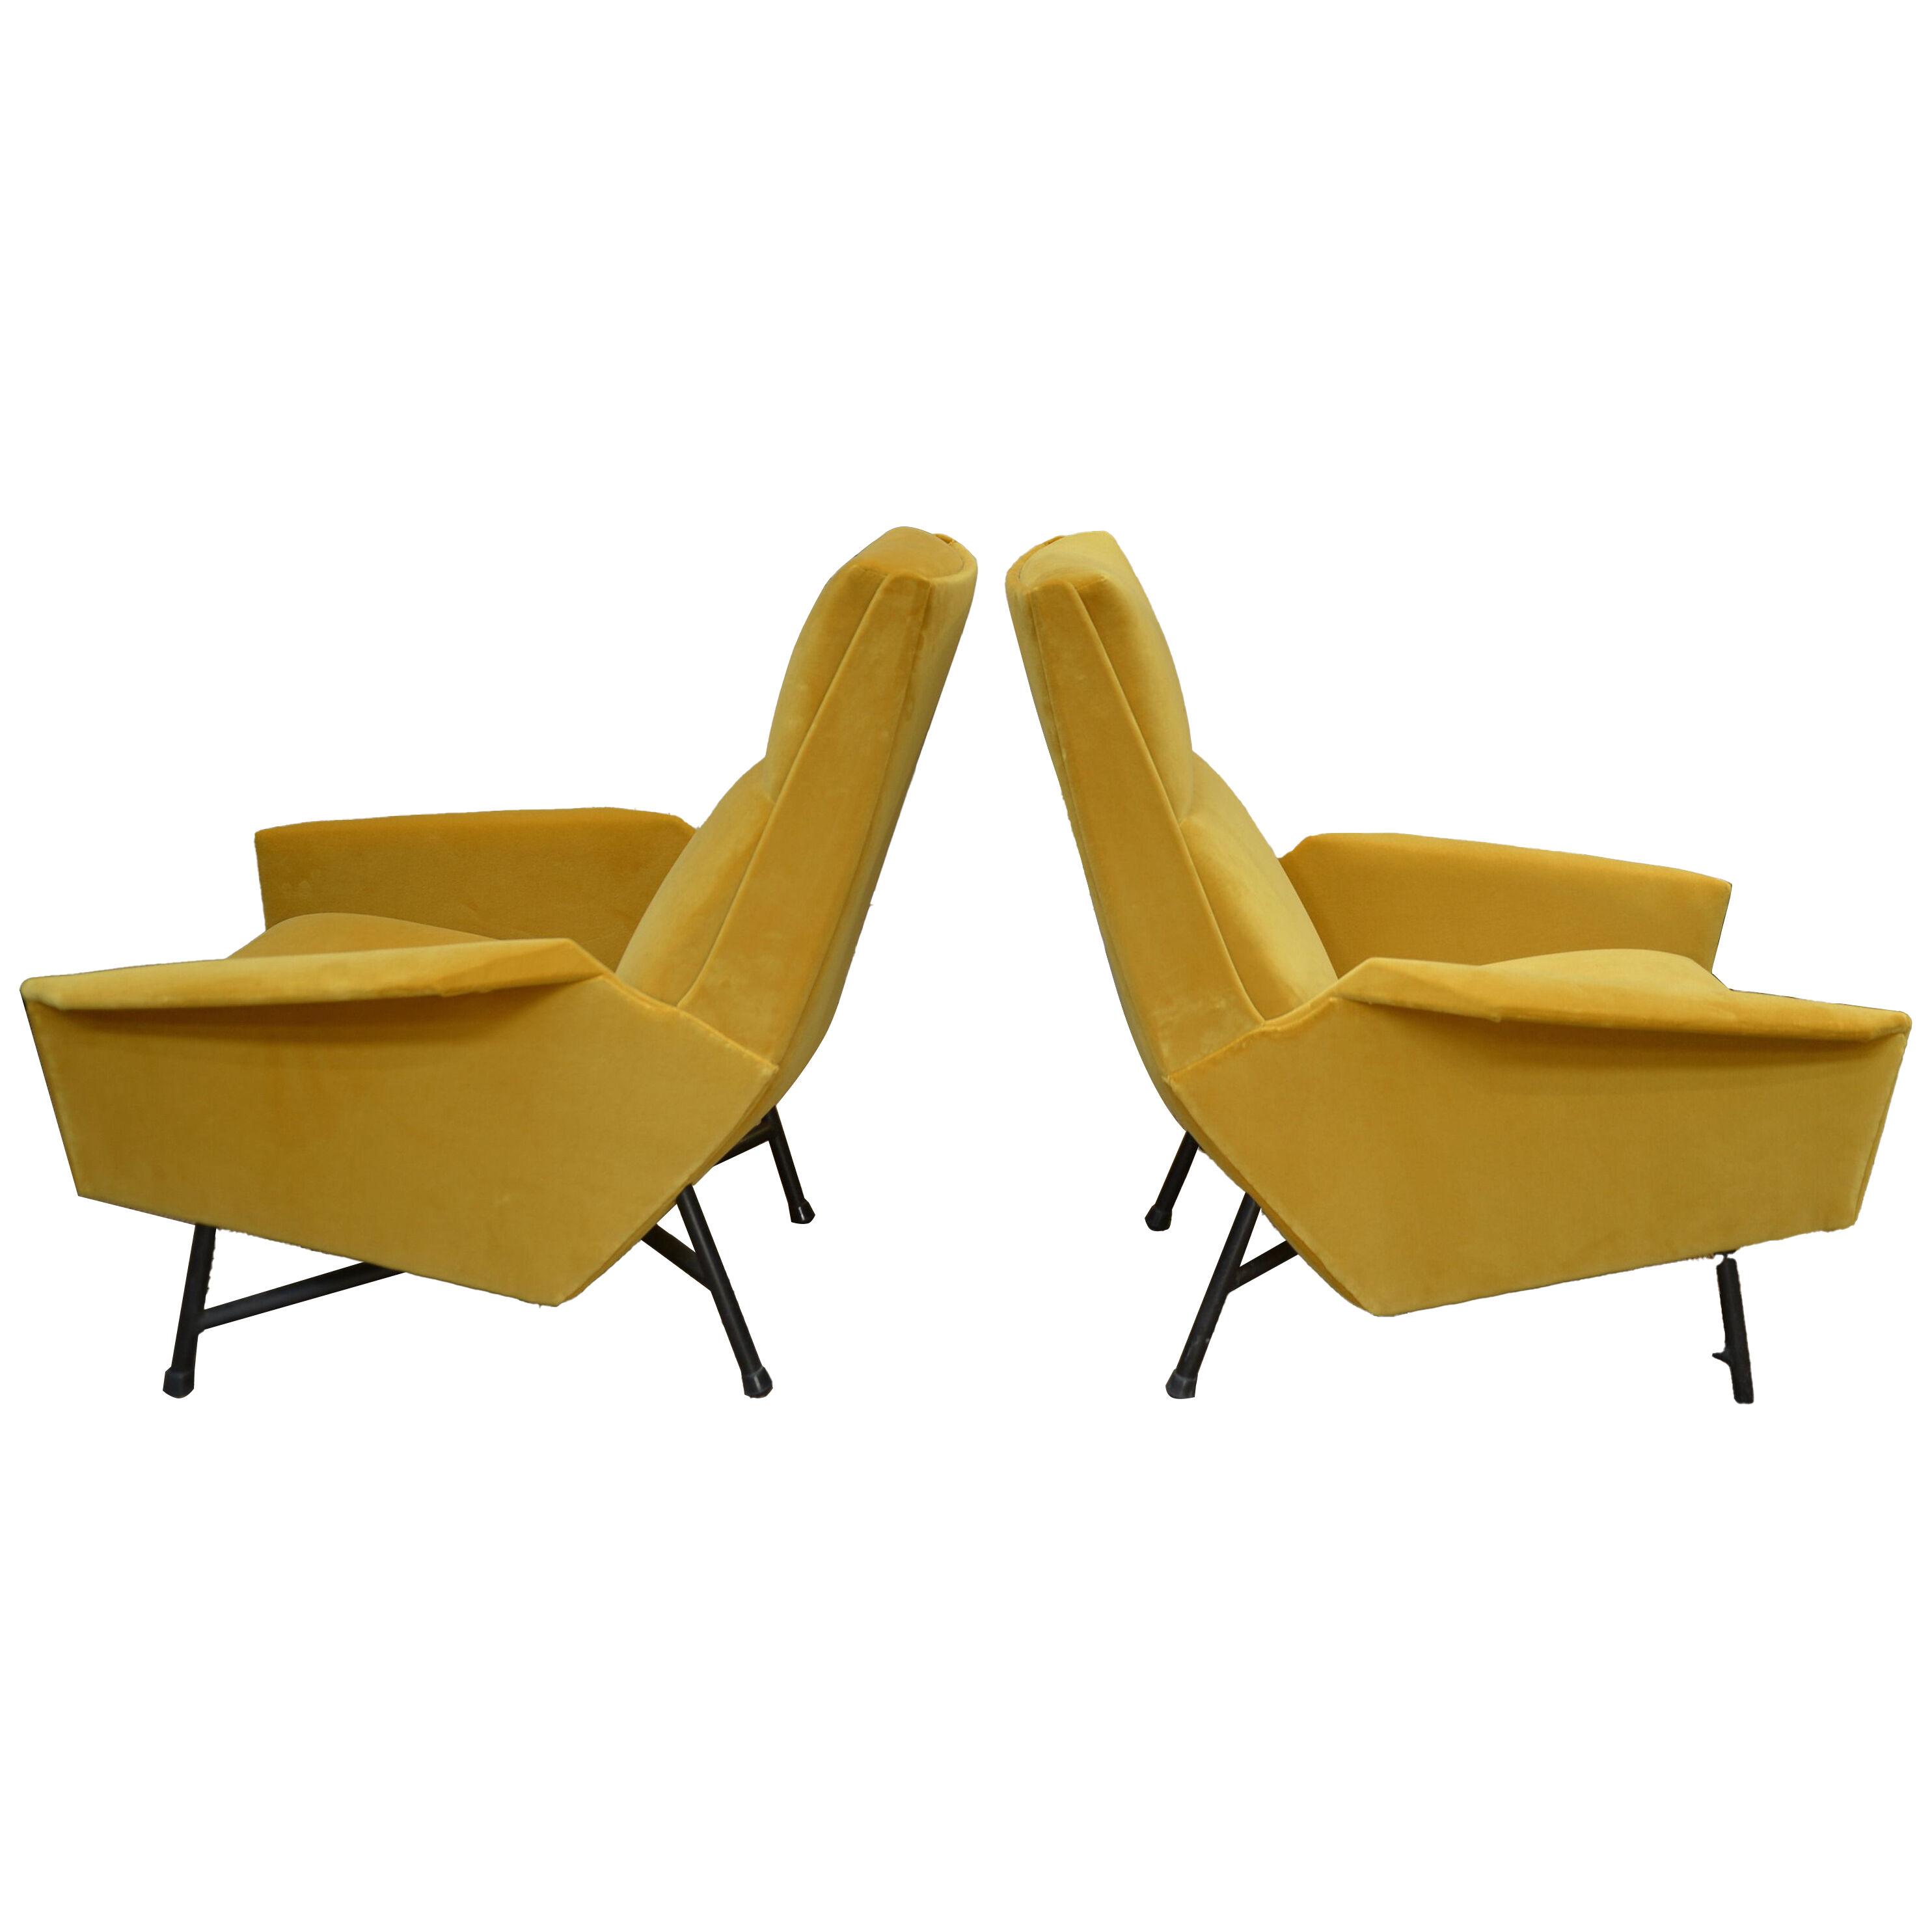  set of 2 armchairs from 1950 by Claude Vassal with Orange yellow  velvet.